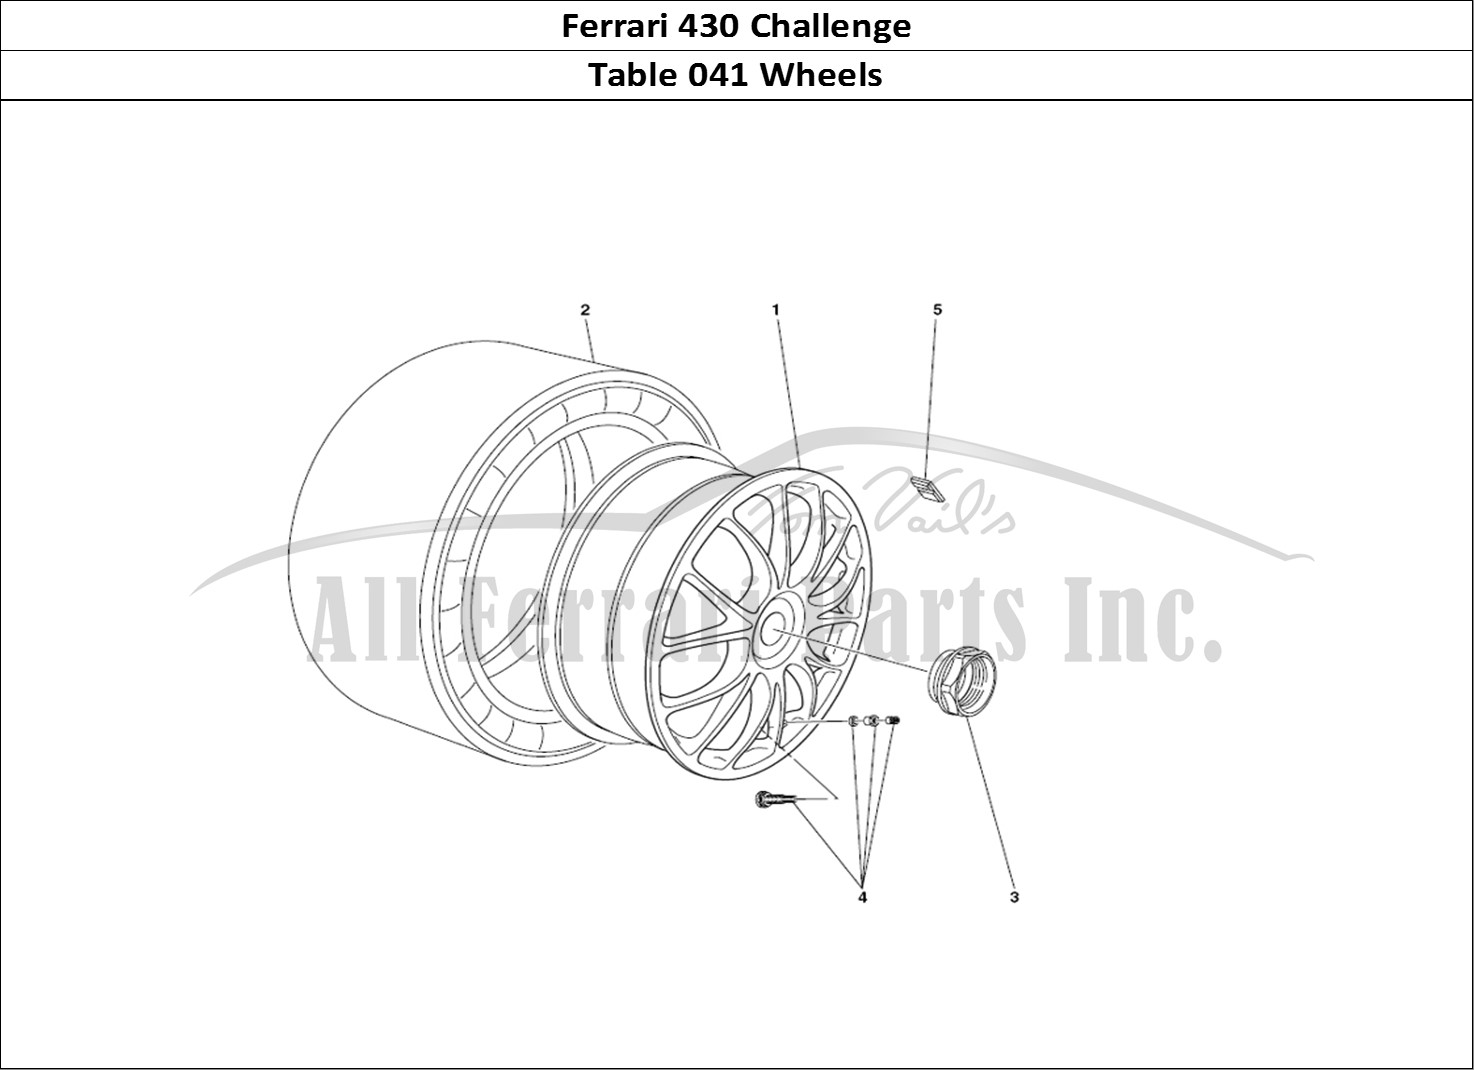 Ferrari Parts Ferrari 430 Challenge (2006) Page 041 Wheels